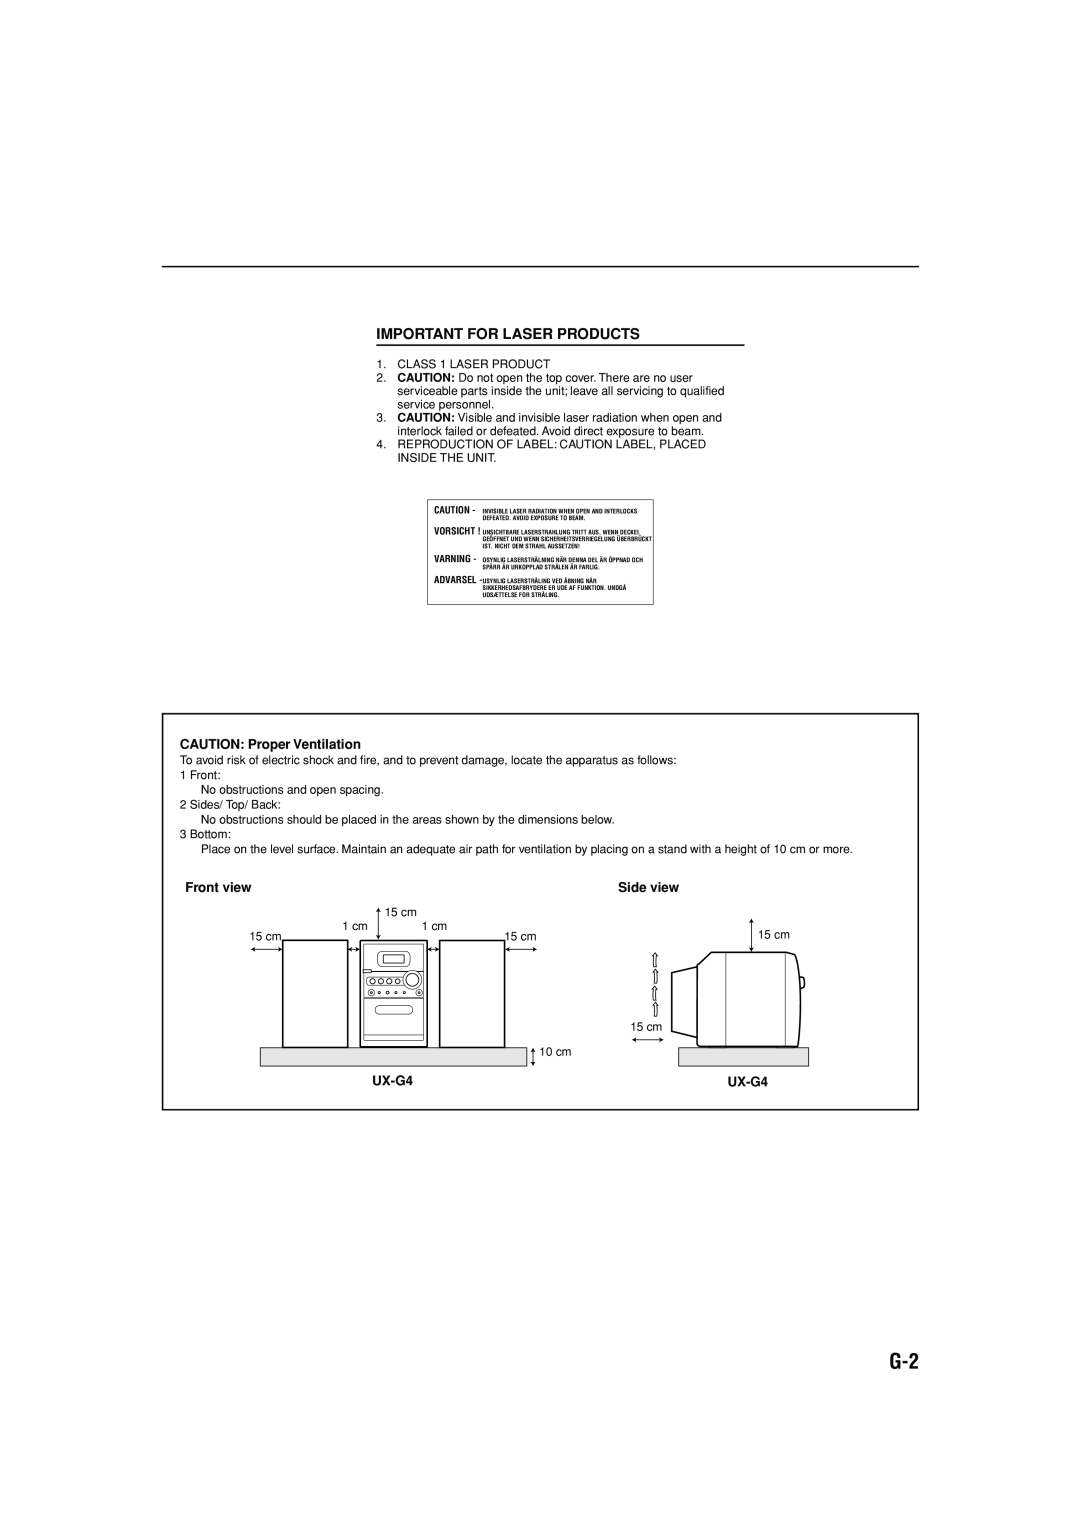 JVC LVT1364-006B manual Important For Laser Products, CAUTION: Proper Ventilation, Front view, Side view, UX-G4 